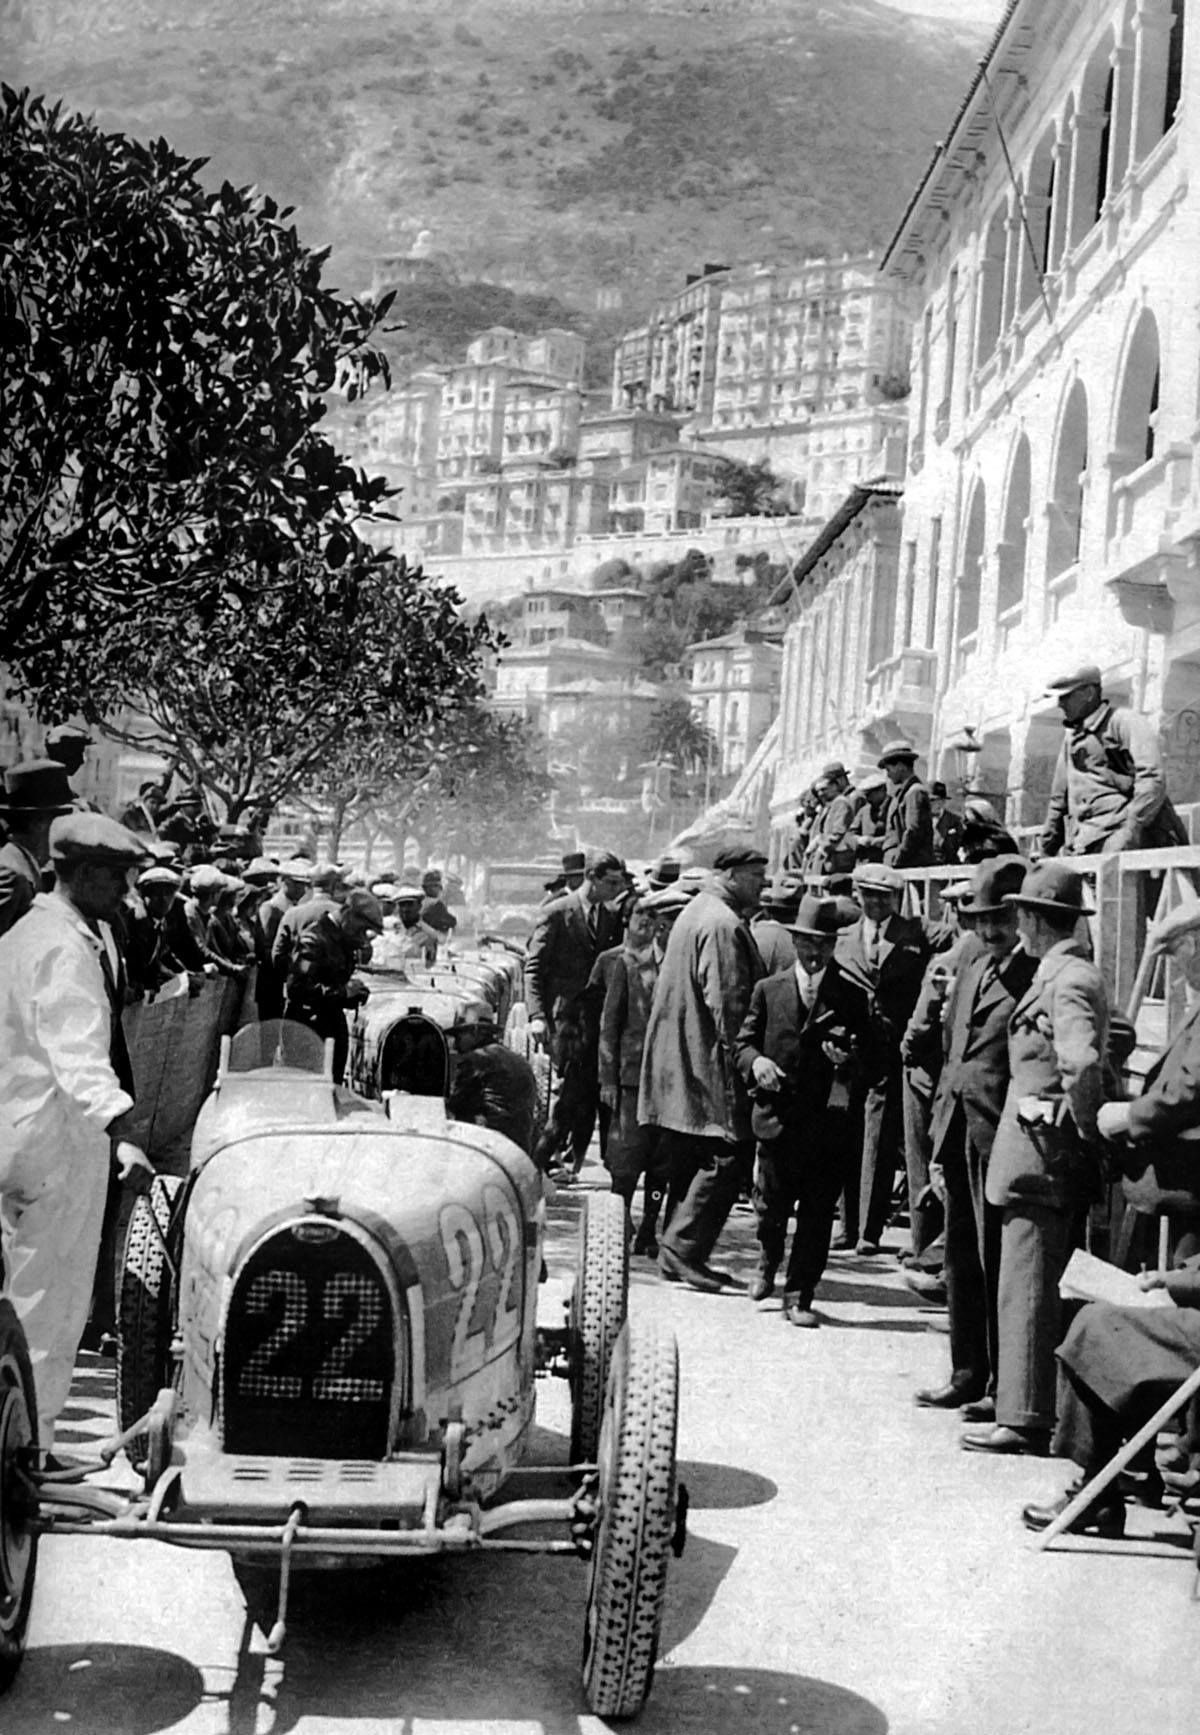 Louis Chiron, Monaco 1931.